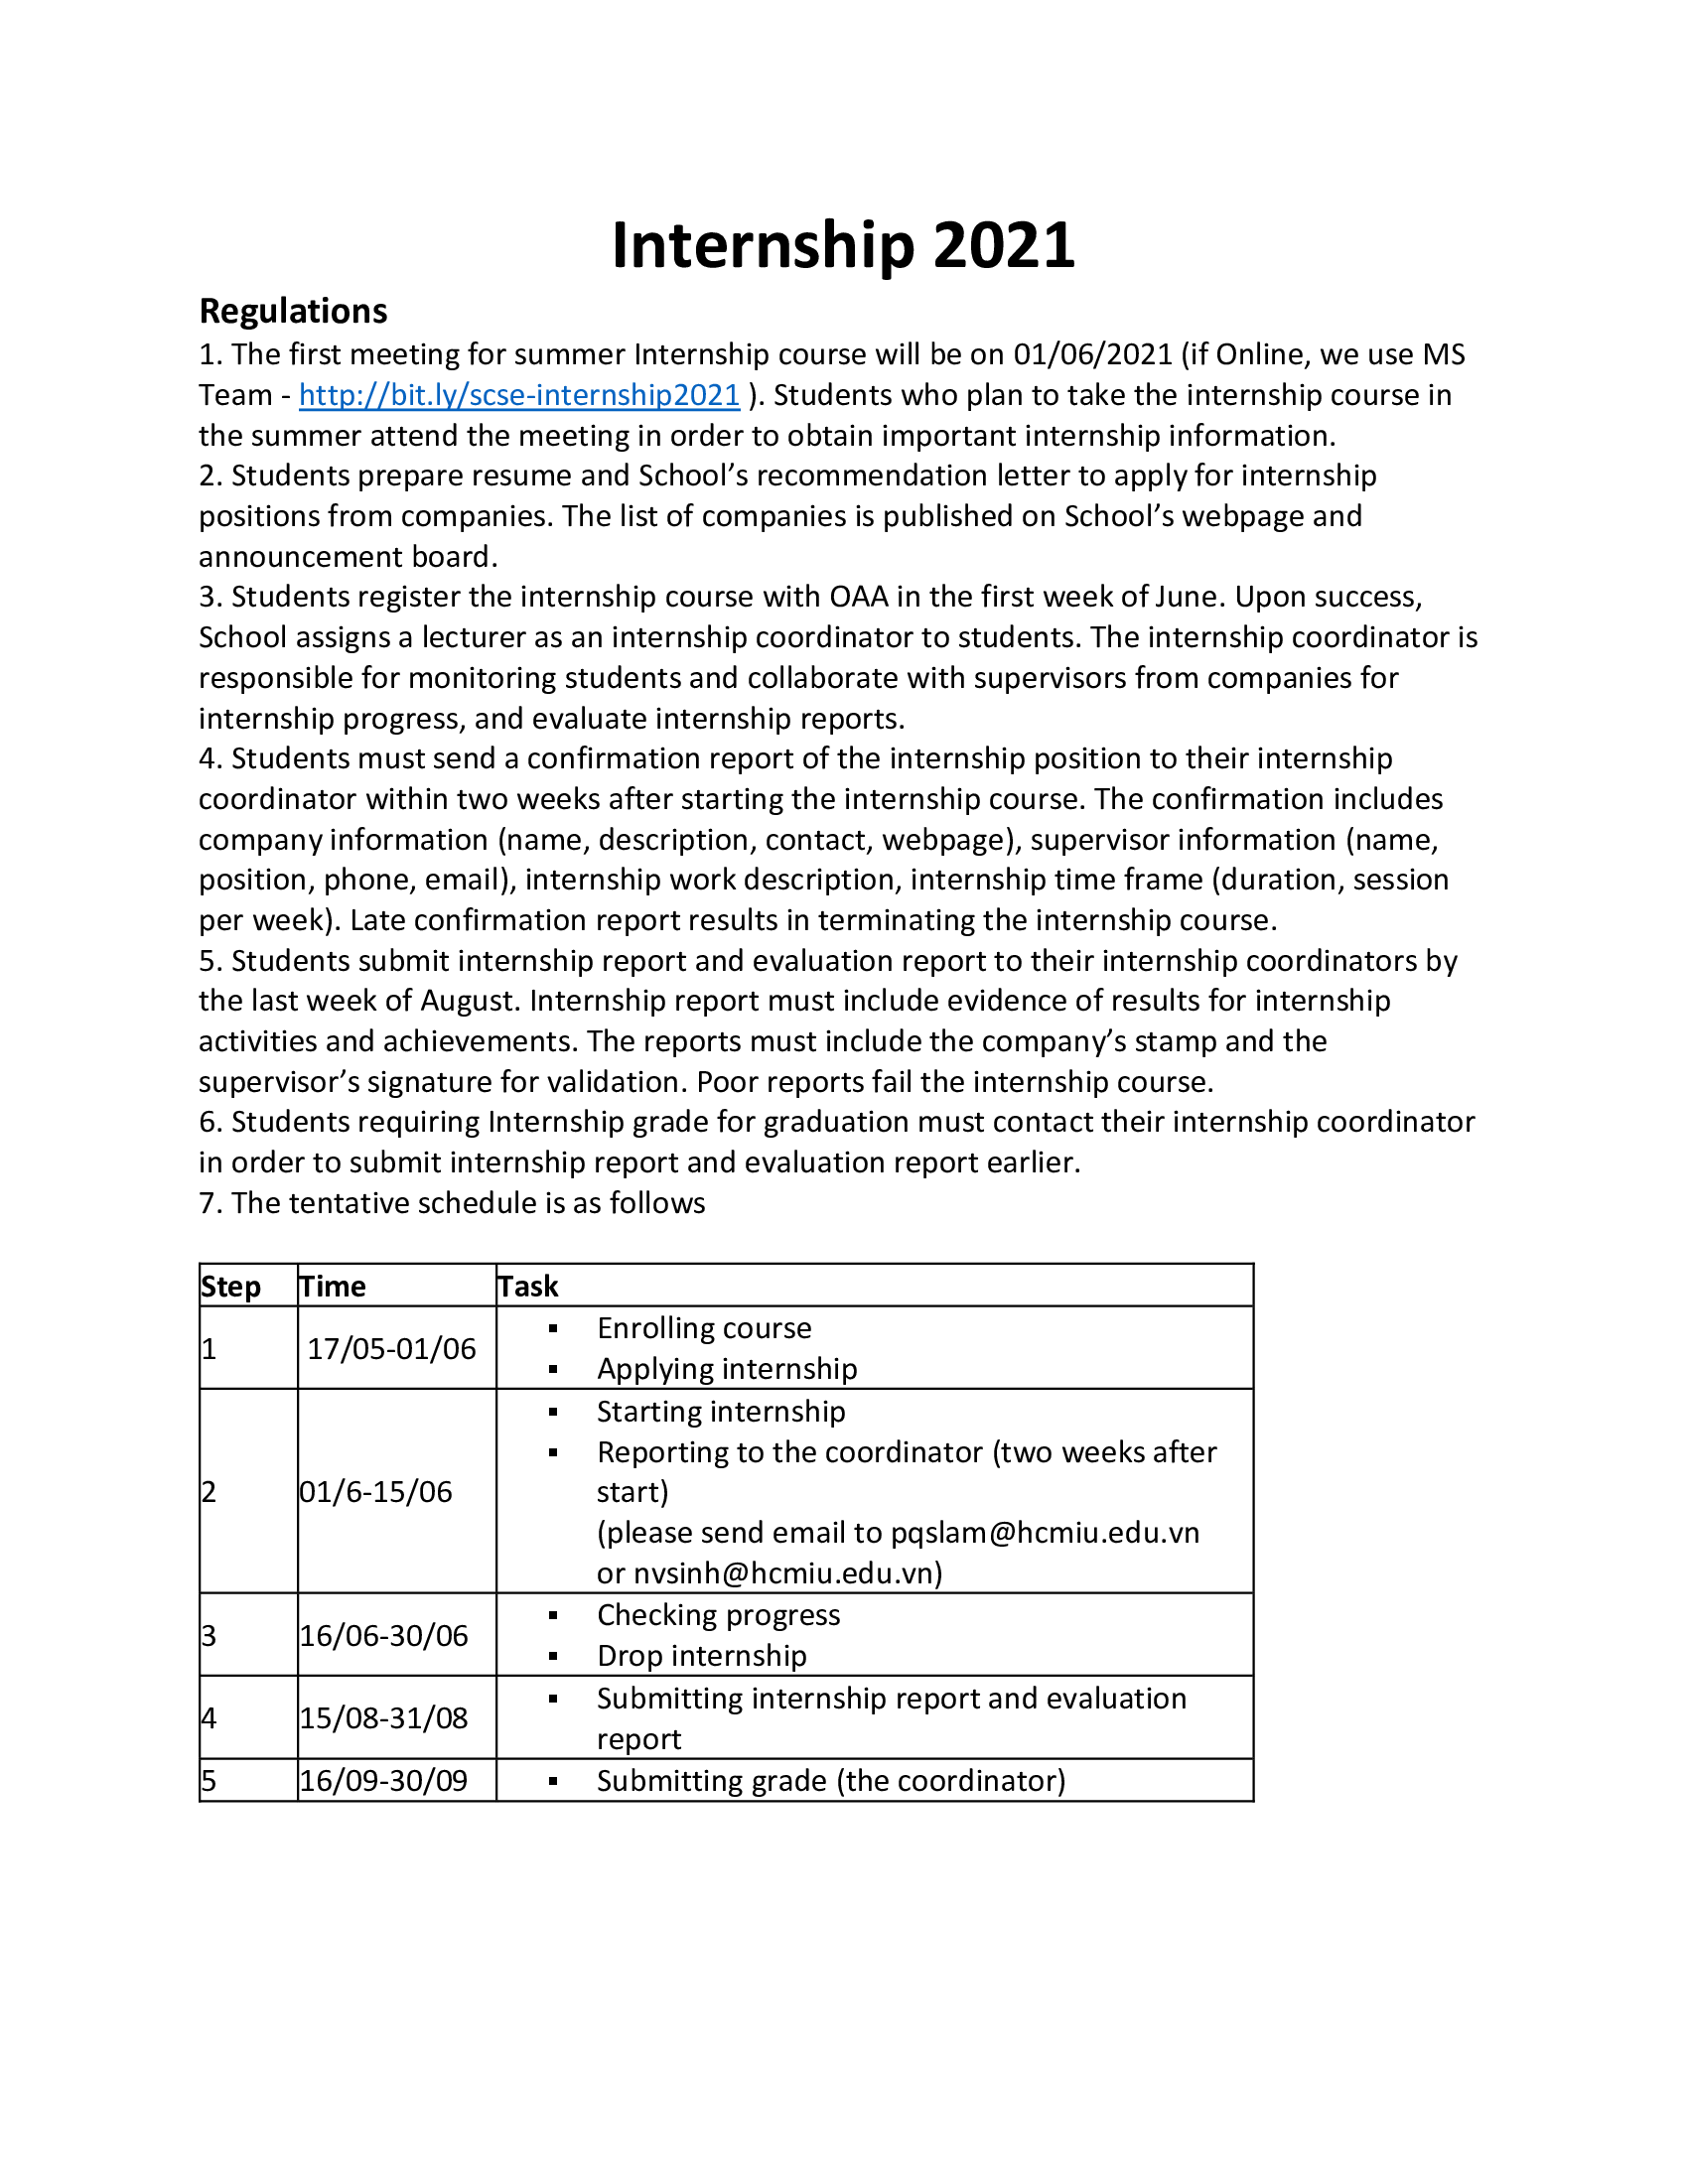 internship-2021 - School of Computer Science and Engineering